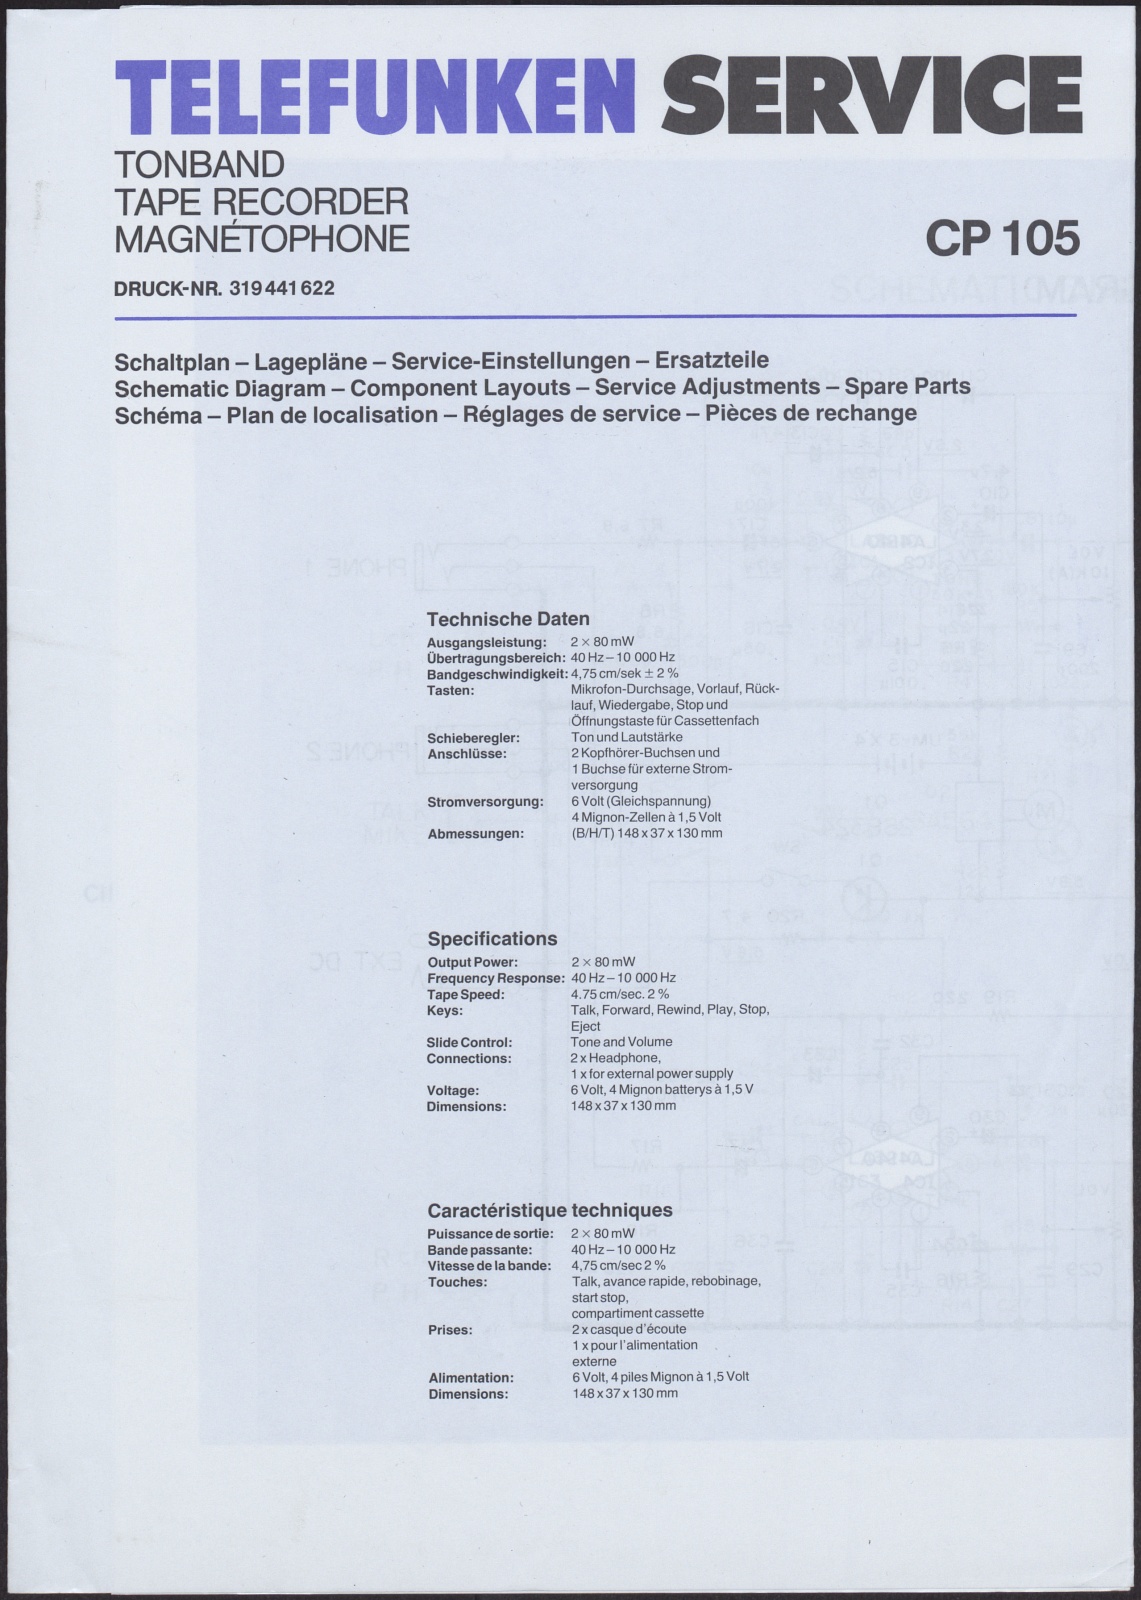 Bedienungsanleitung: Telefunken Service Tonbandgerät magnetophone CP 105 (Stiftung Deutsches Technikmuseum Berlin CC0)